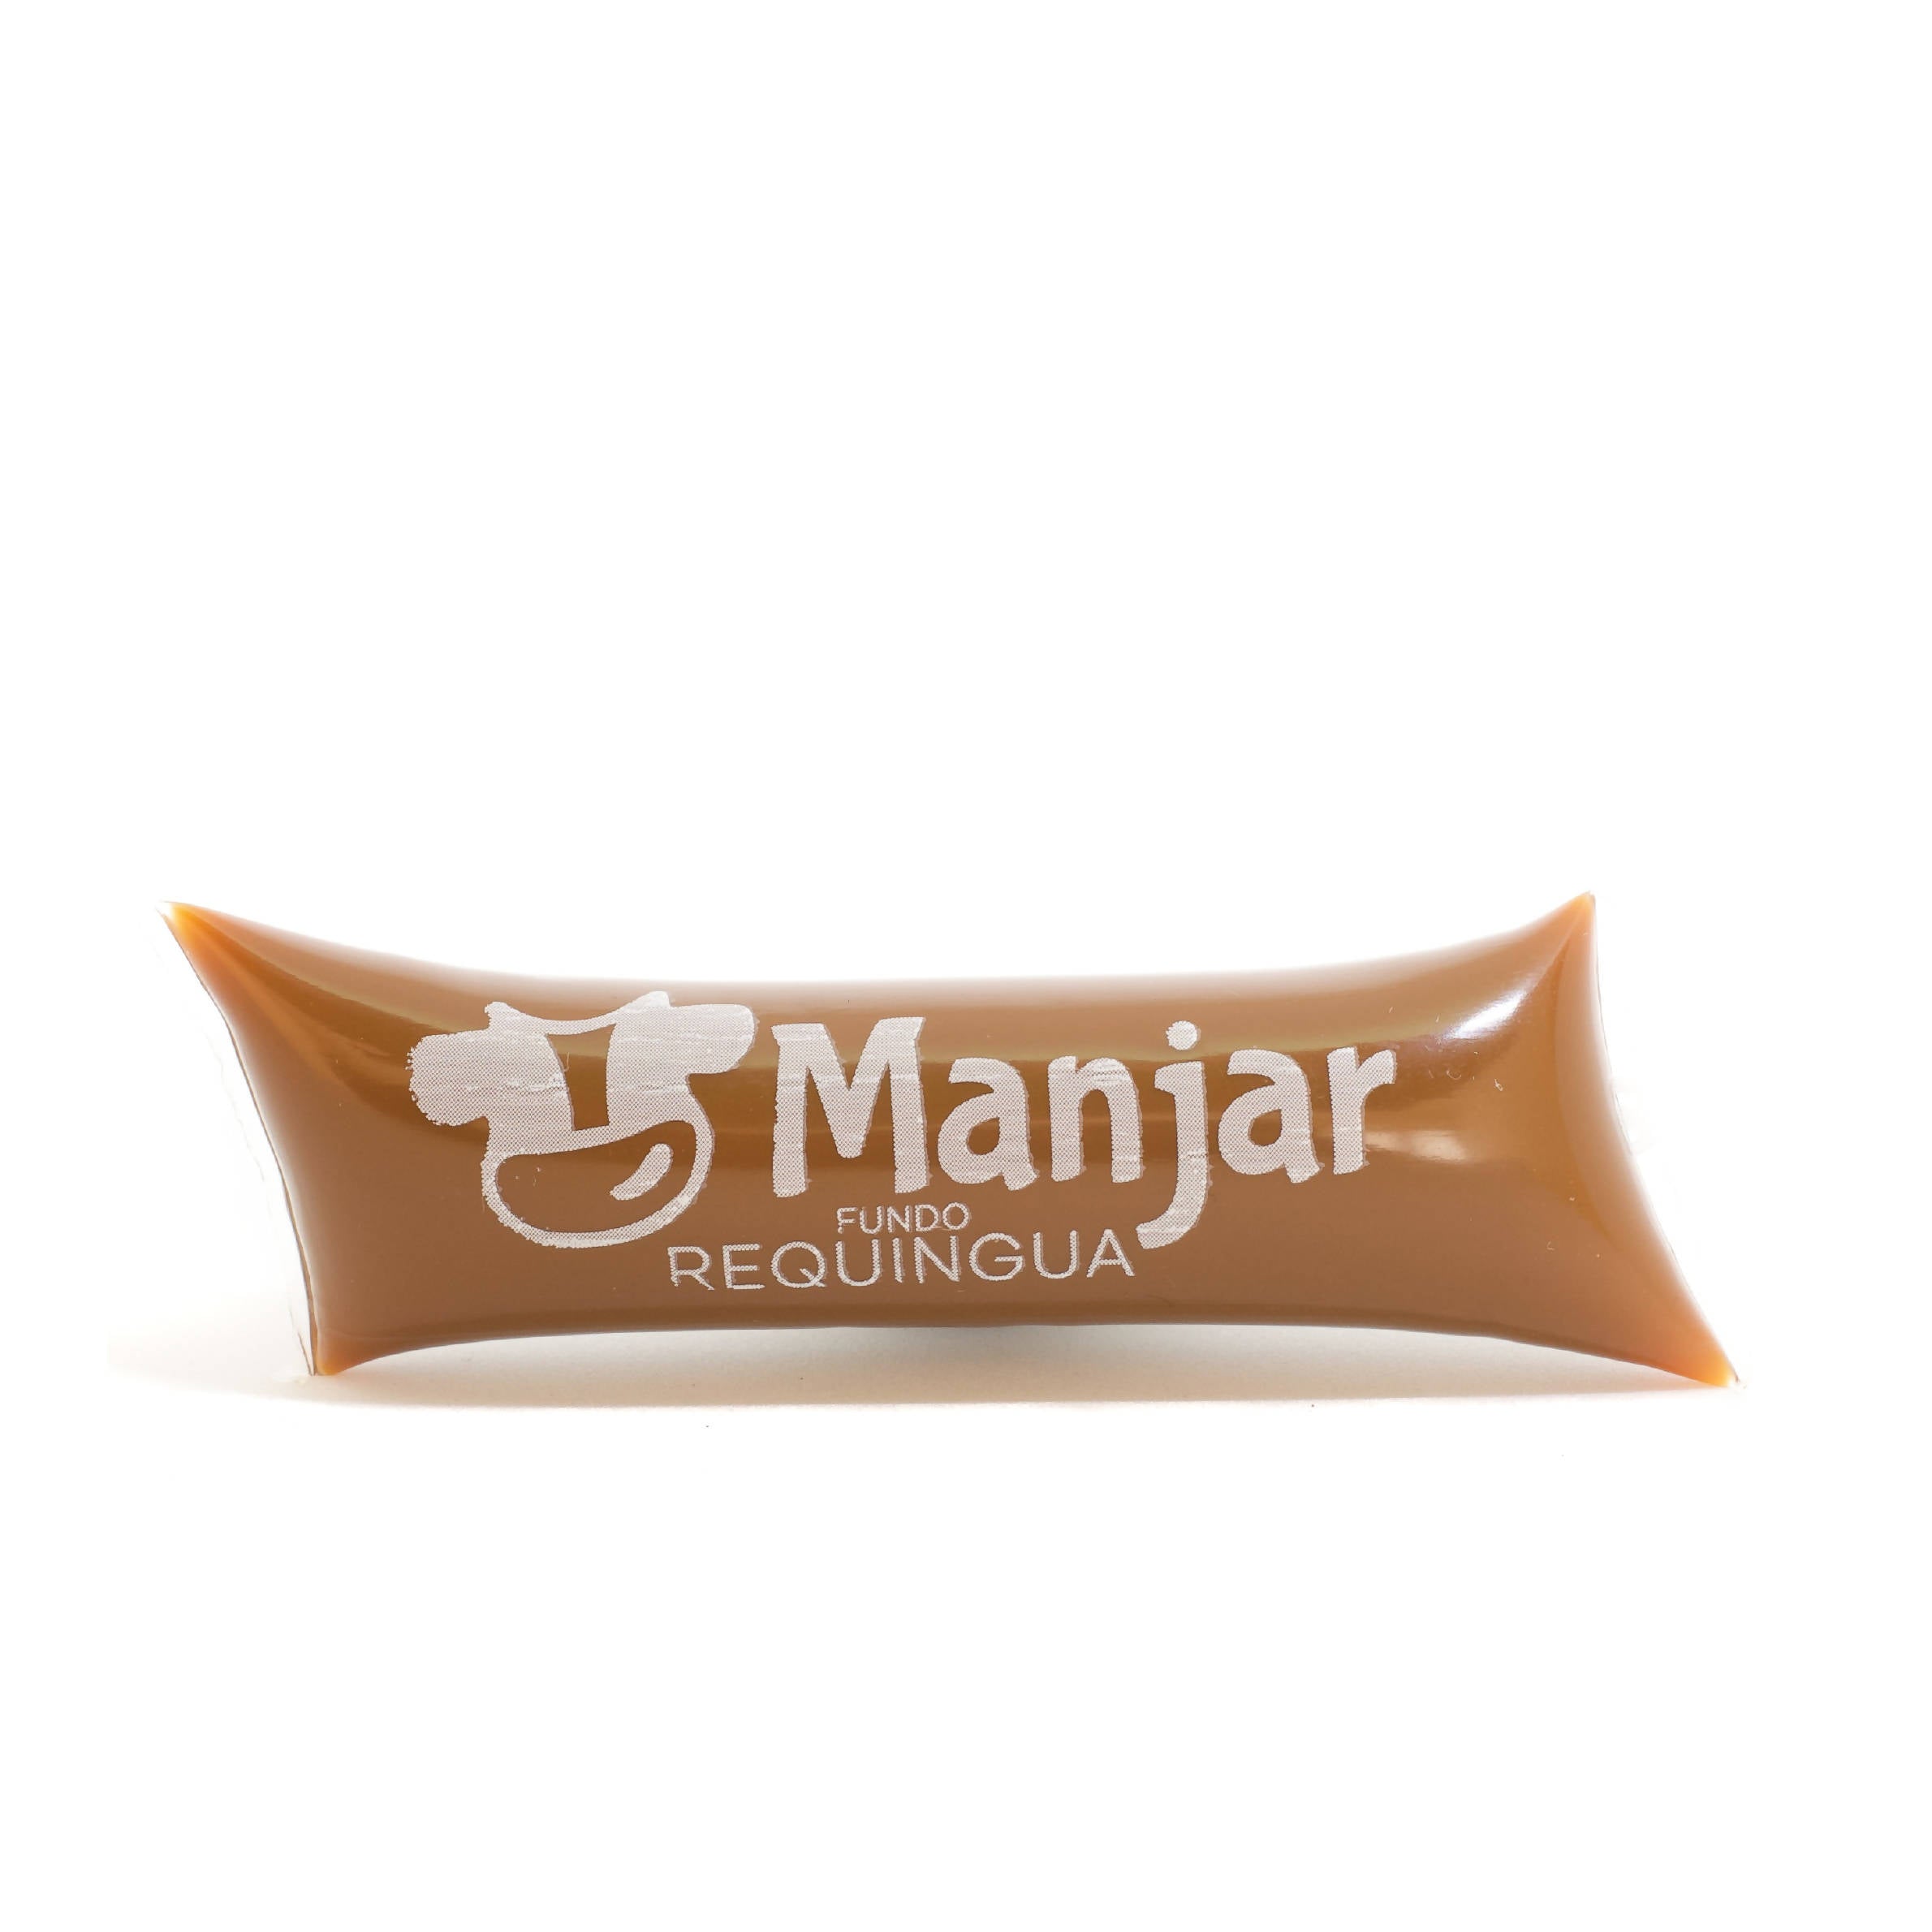 Chupones de Manjar - Malla (25 unids)